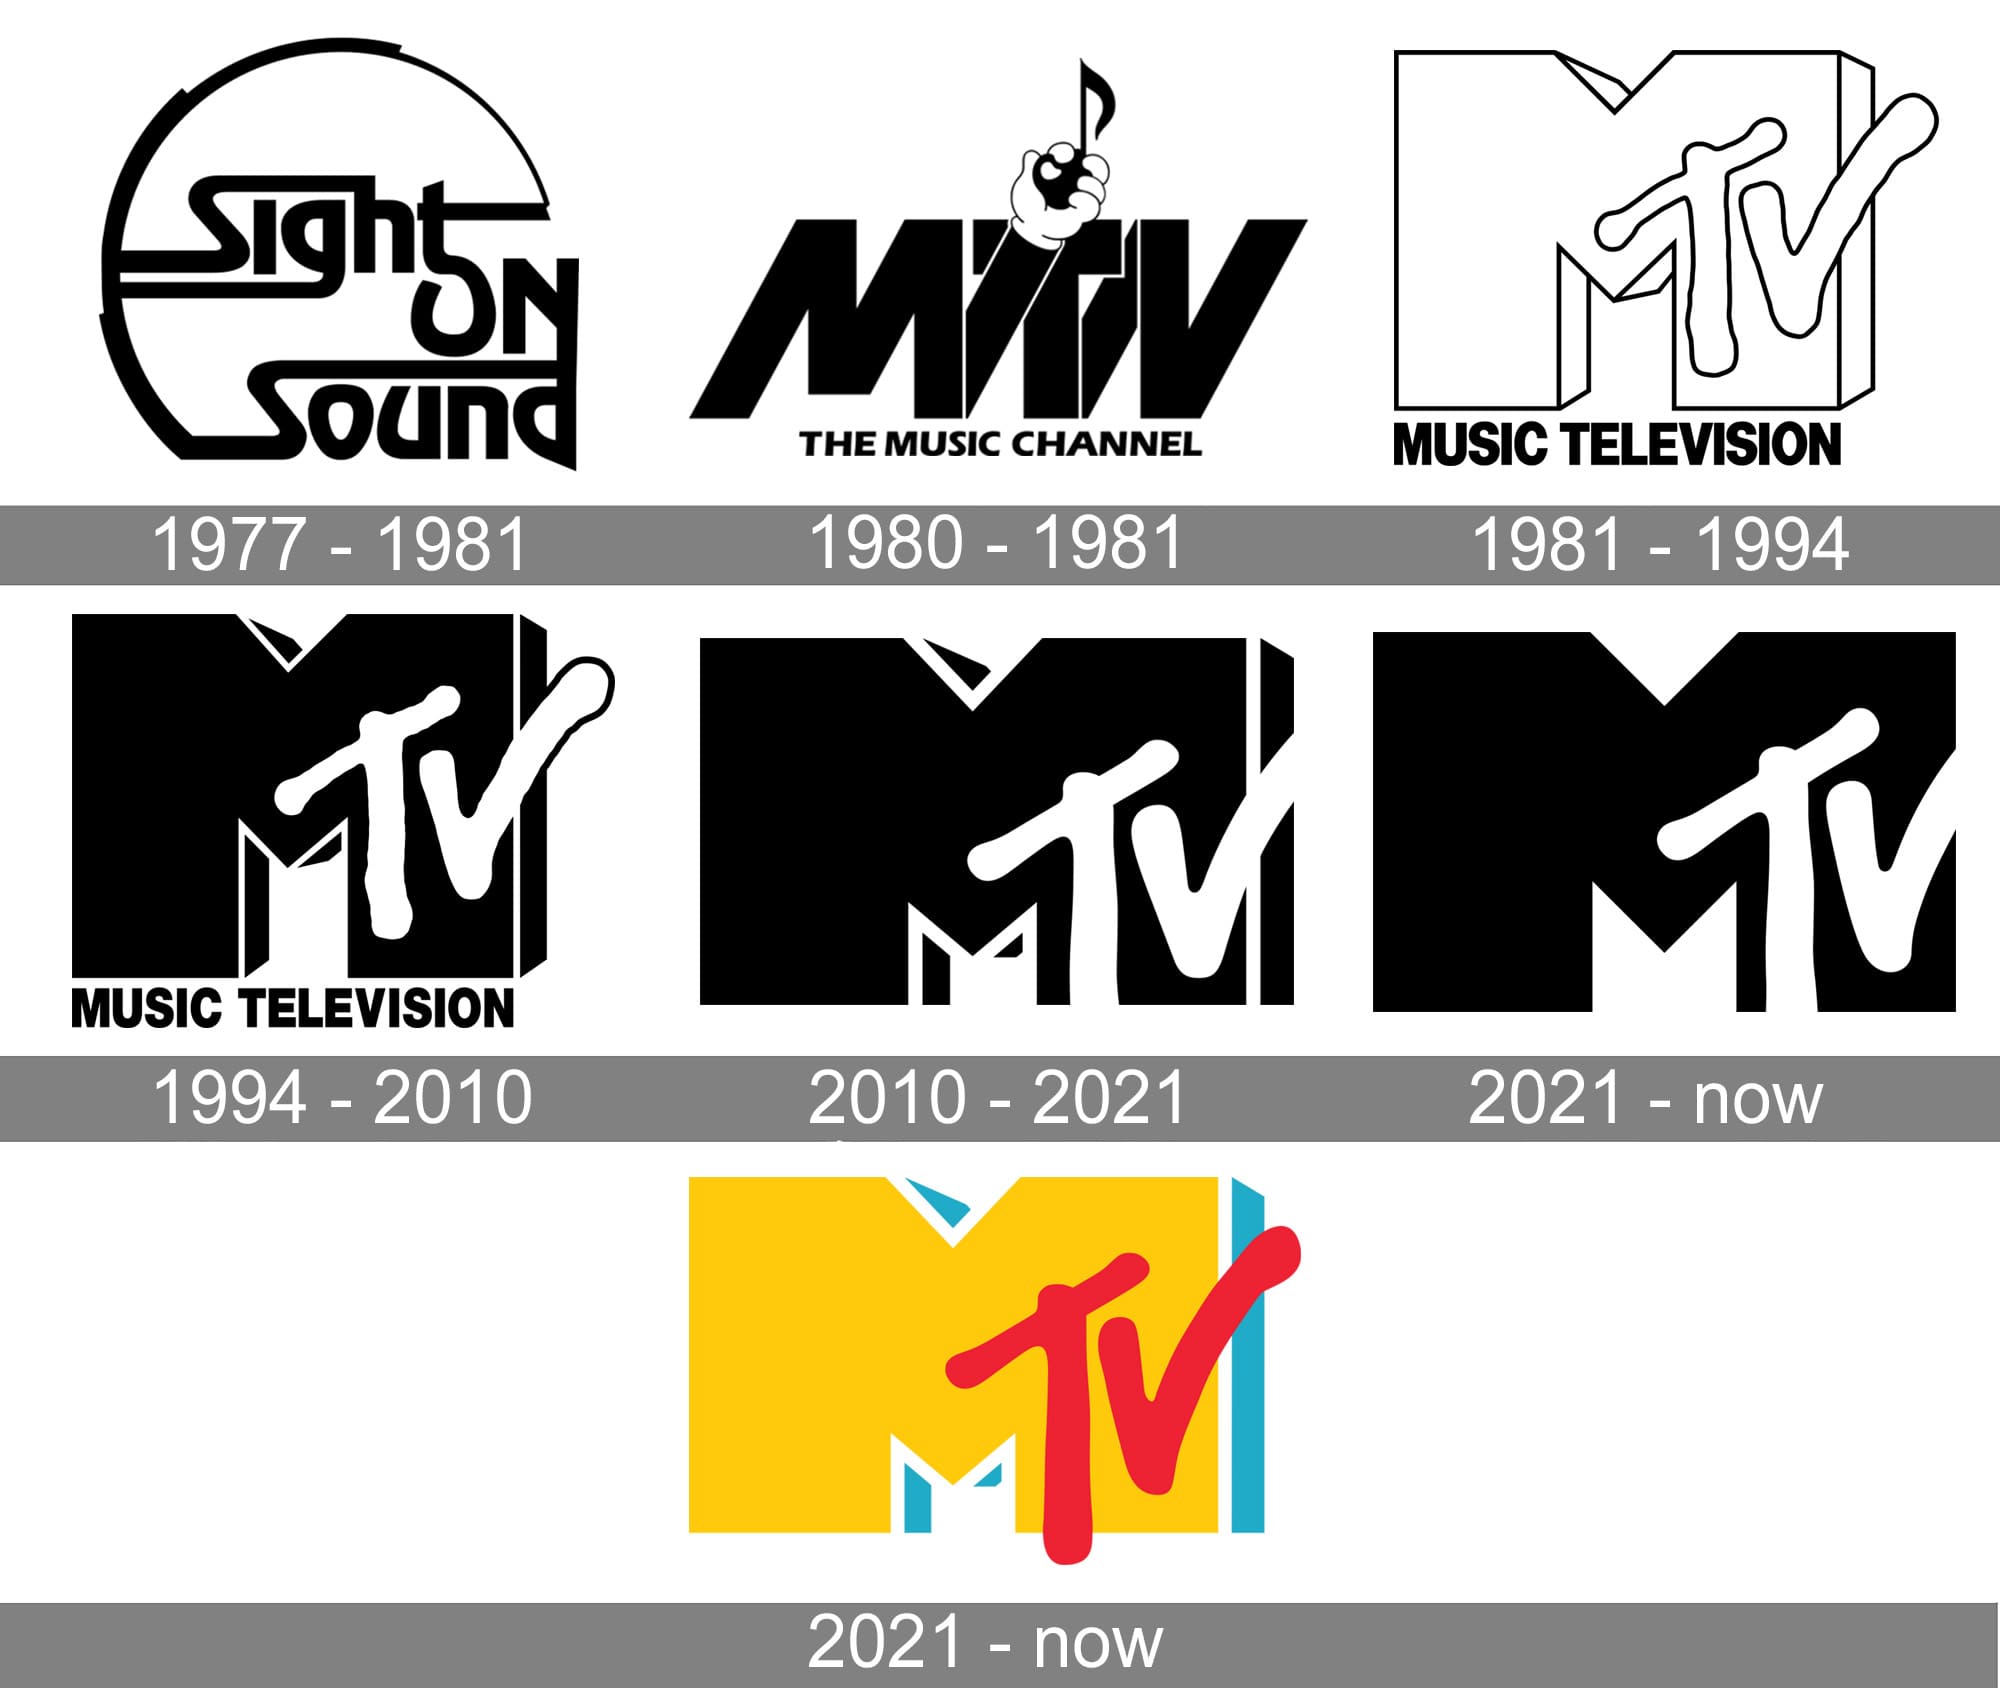 mtv network logo